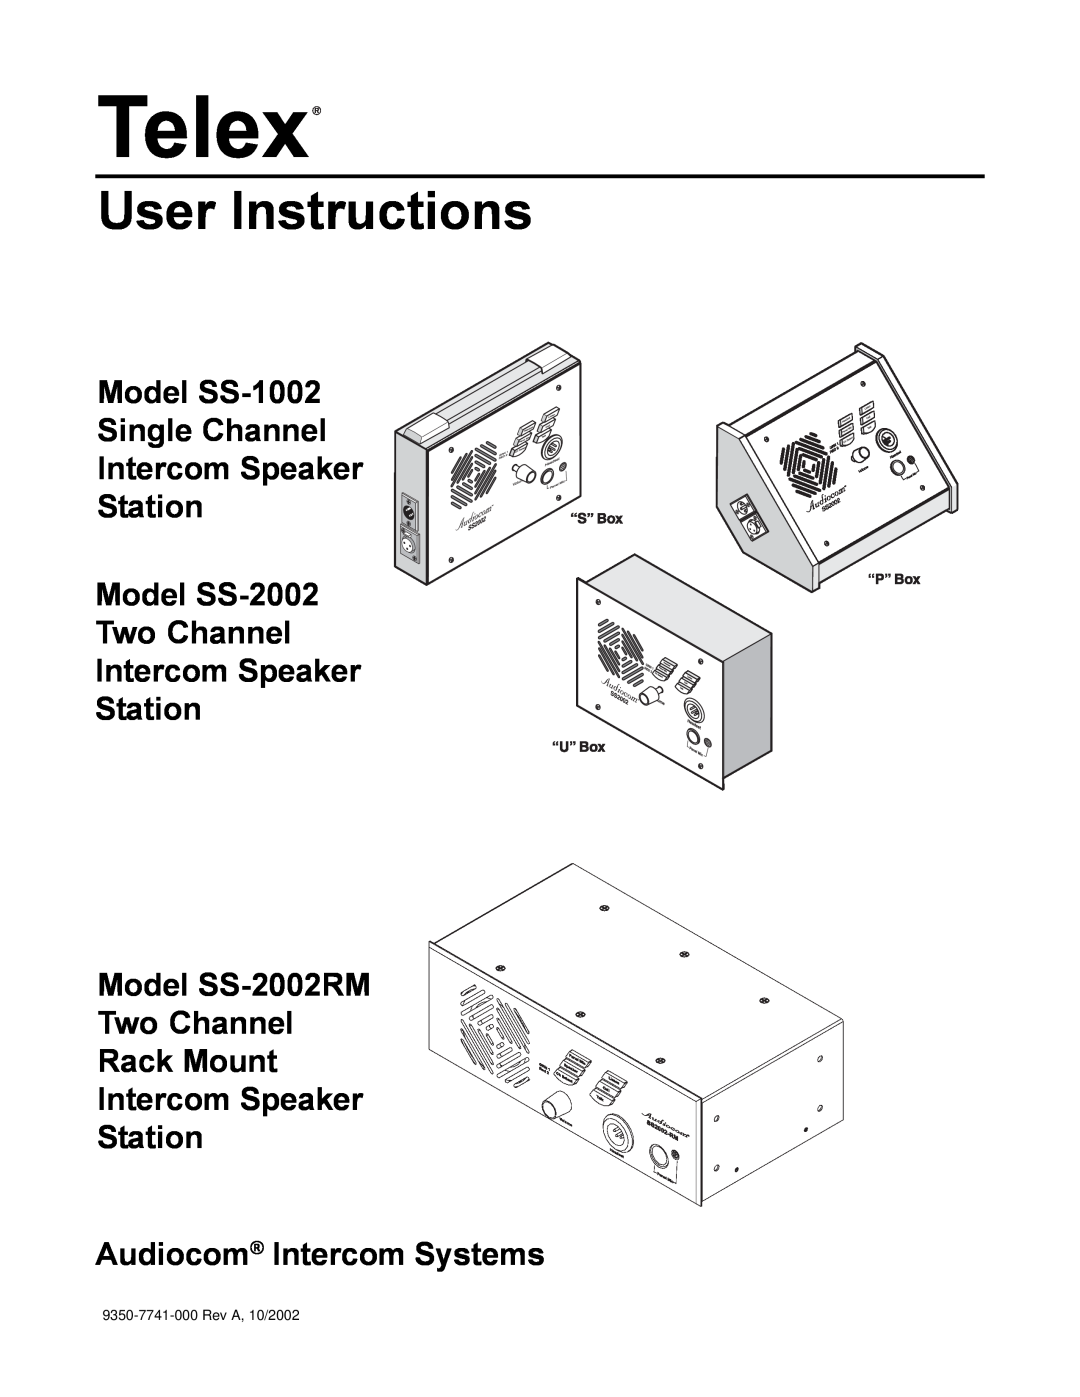 Telex technical manual Technical Manual, Model SS-1002, Models SS-2002, Model SS-2002RM, 9350-7741-000Rev E, 07/2009 